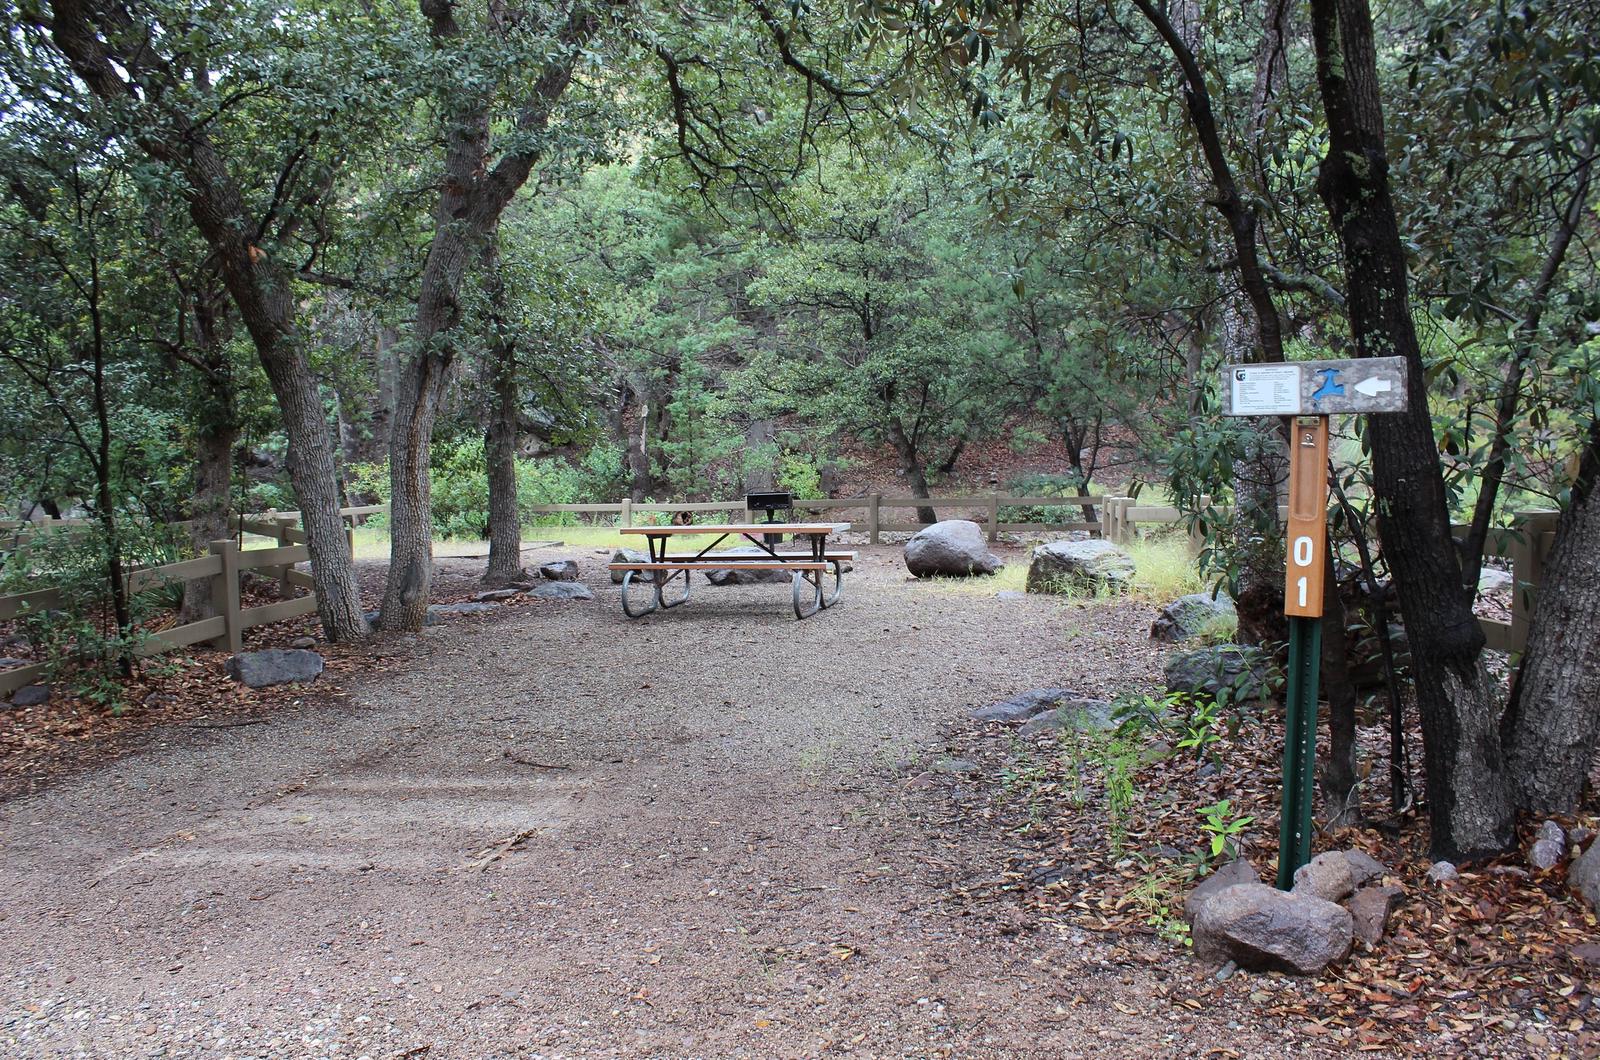 Campsite #1 is located next to Bonita Creek, which flows seasonally.Campsite #1